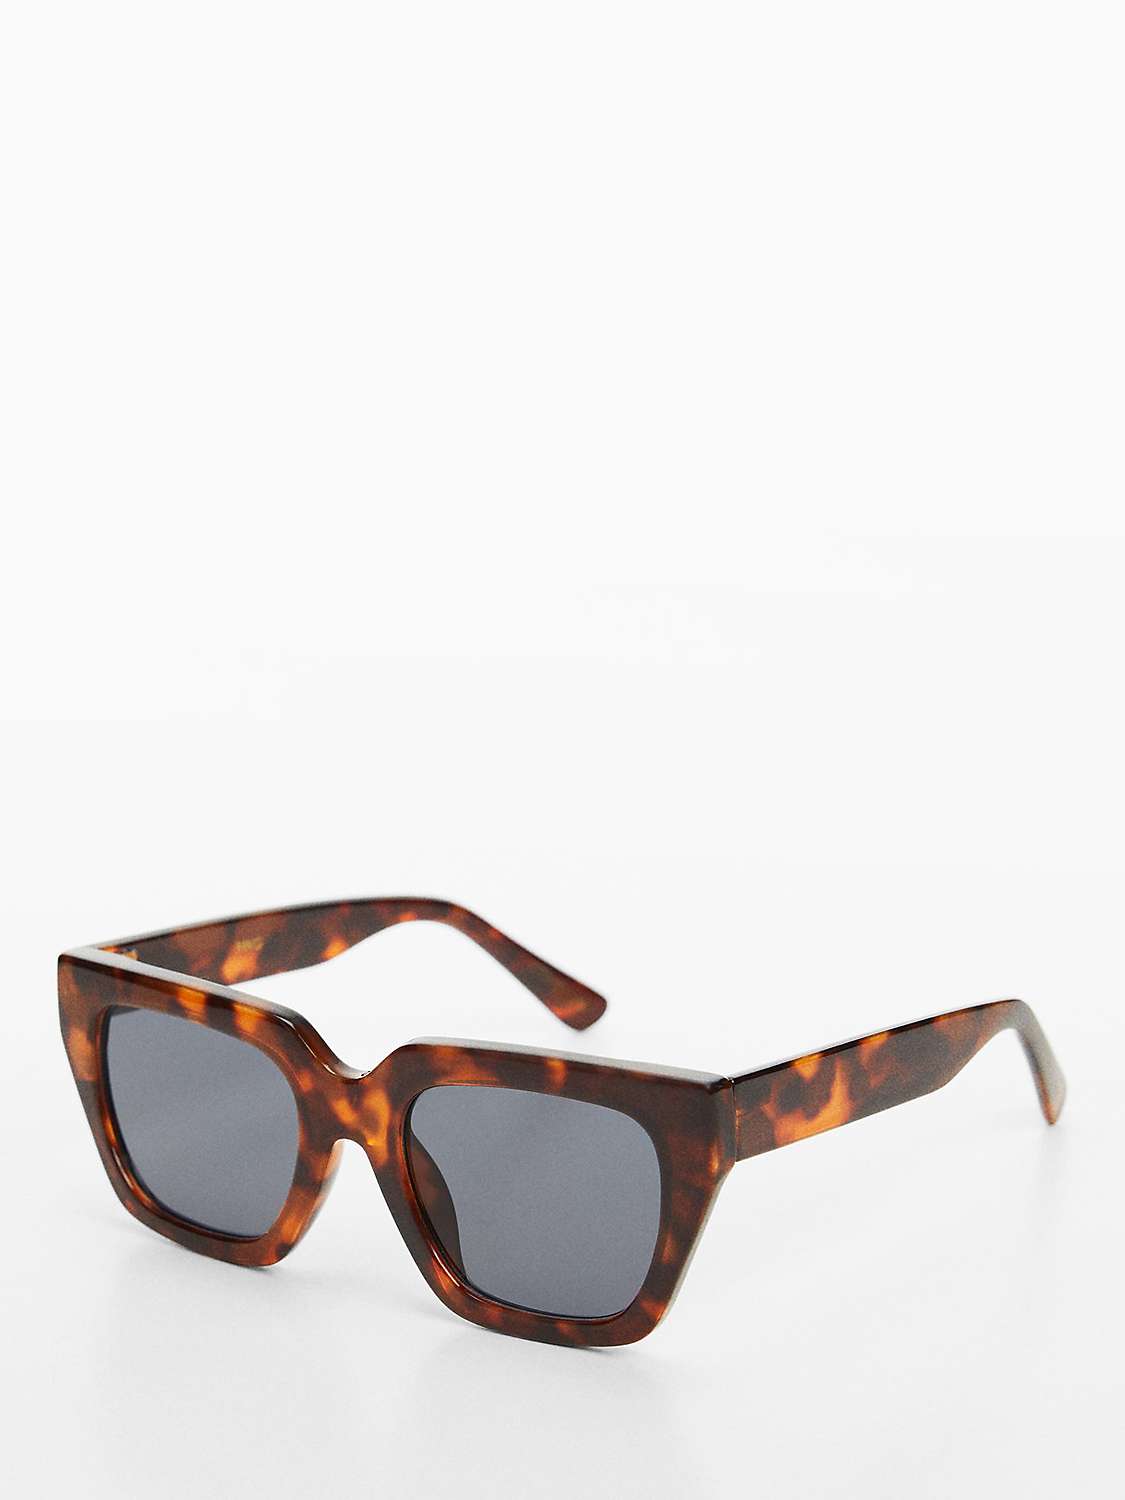 Buy Mango Women's Monica D-Frame Sunglasses, Havana/Blue Online at johnlewis.com